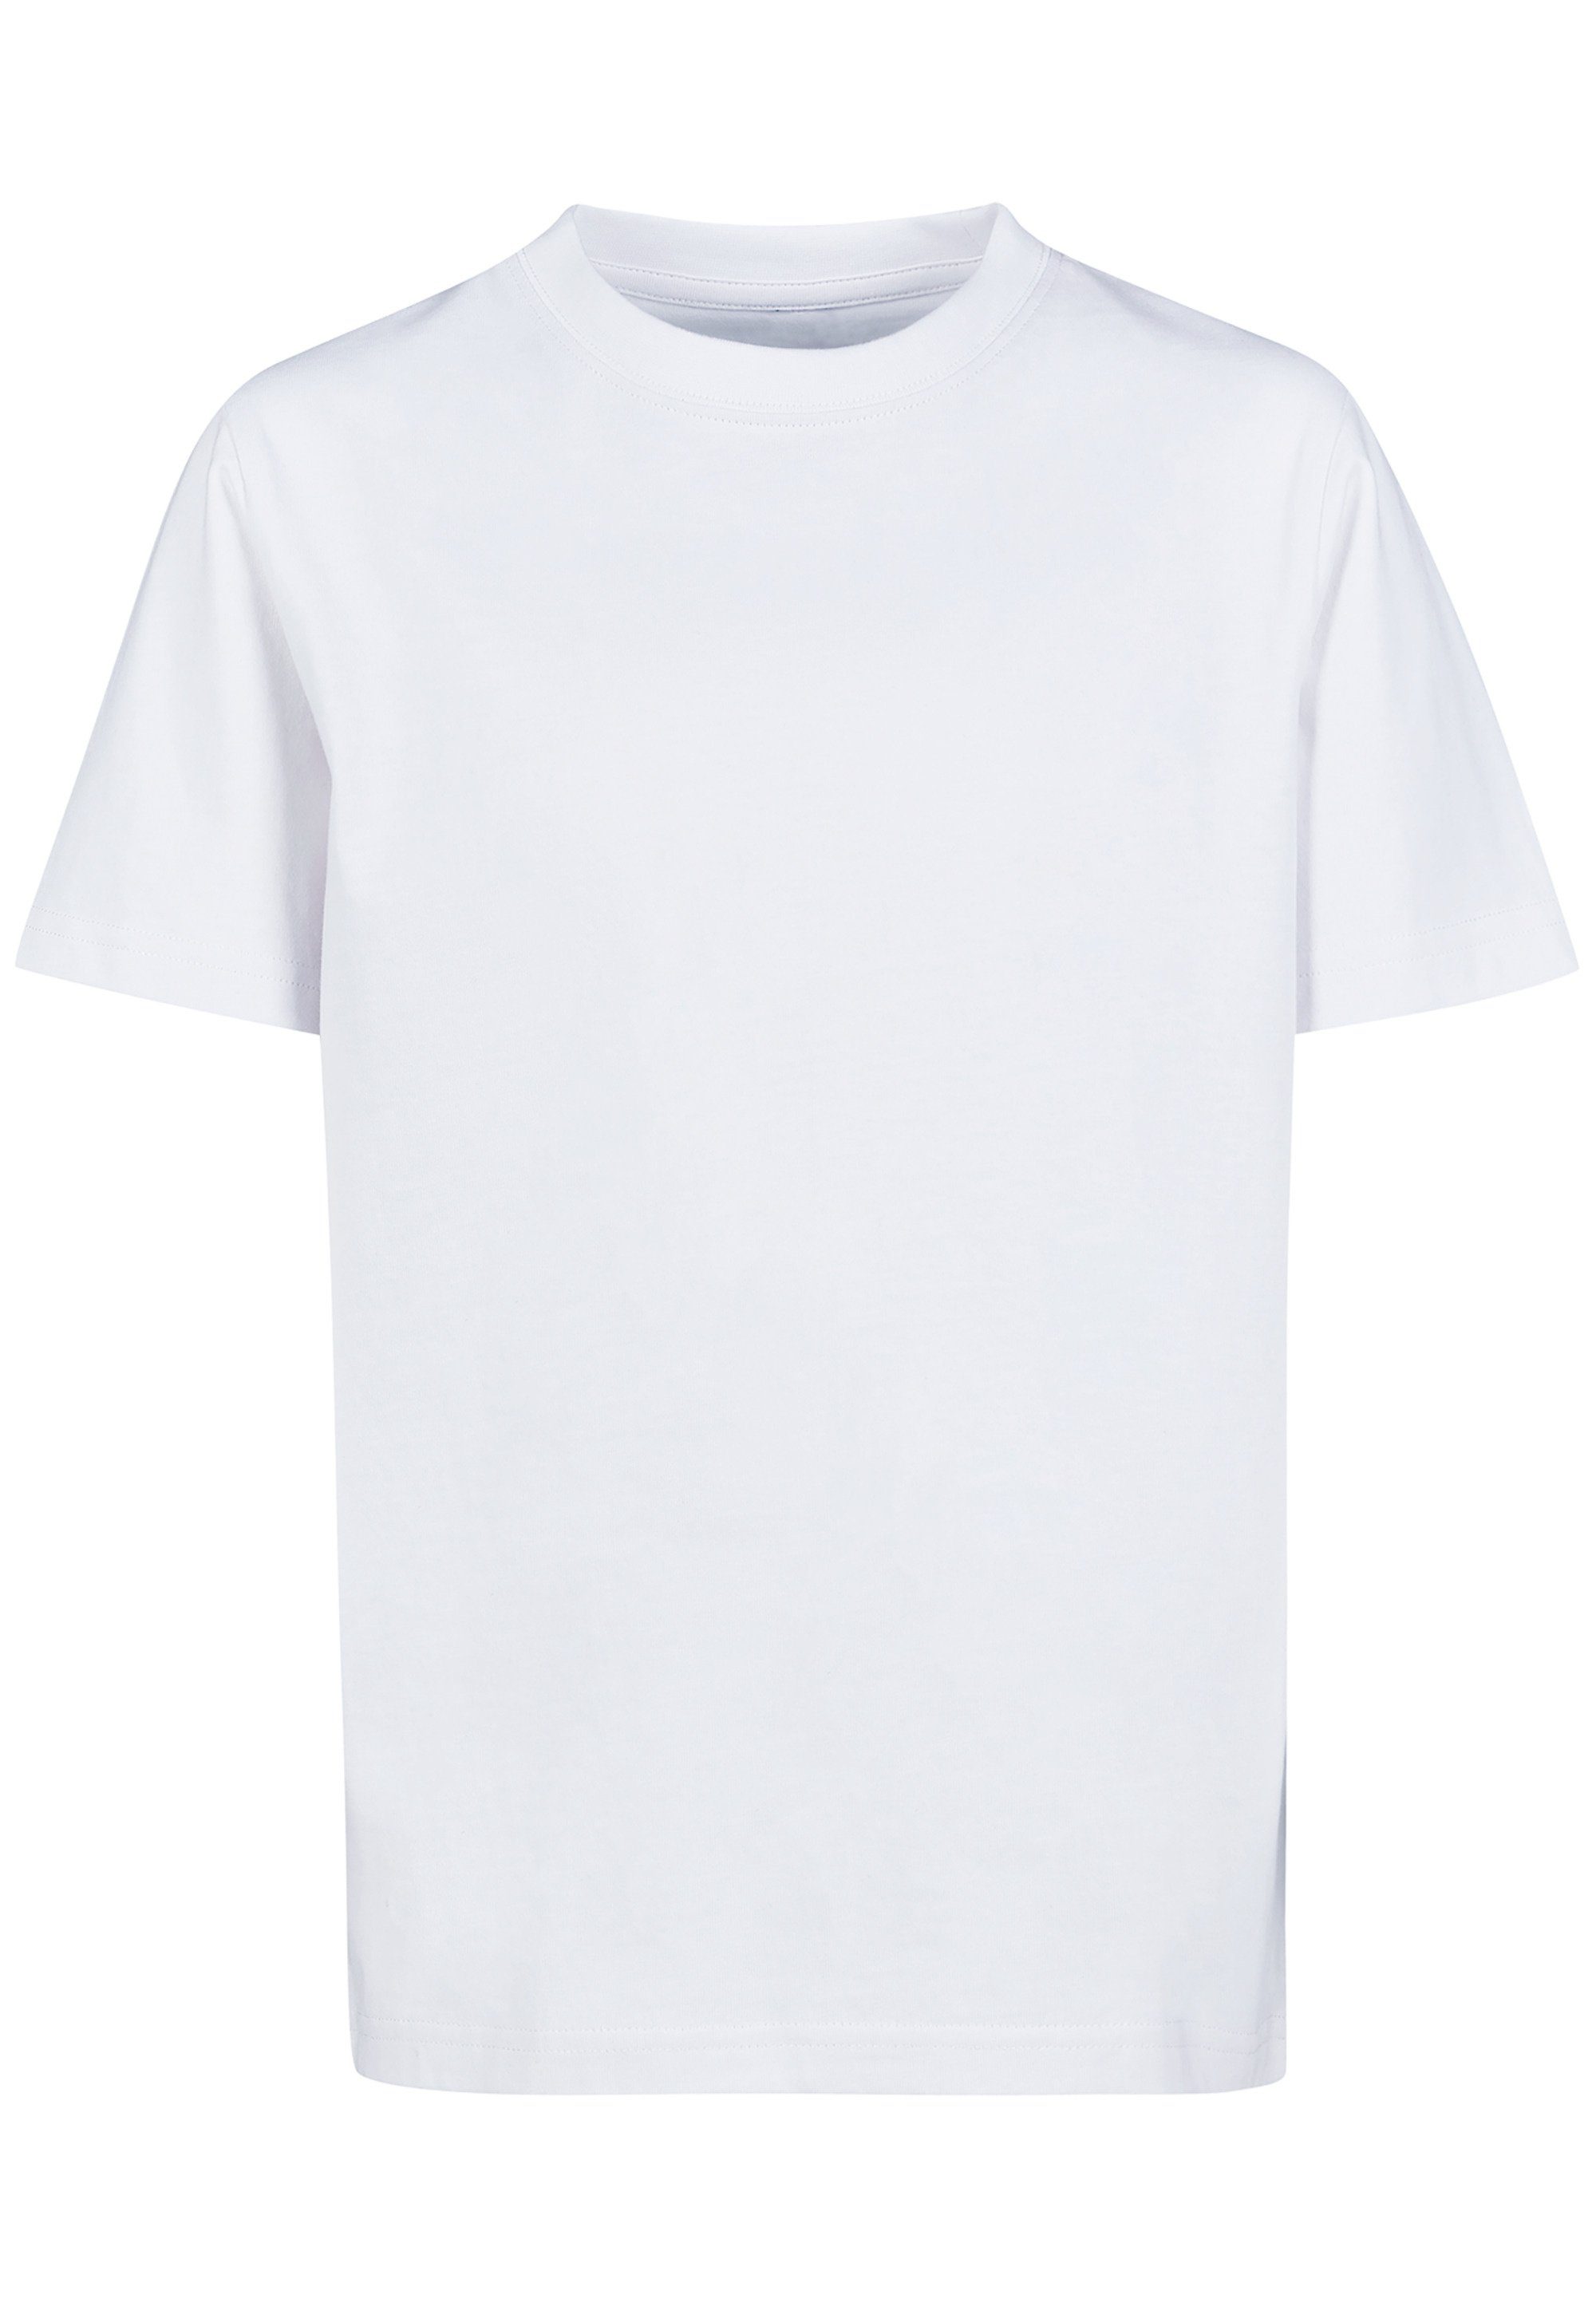 T-Shirt UNISEX Print F4NT4STIC SKYLINE TEE weiß PARIS